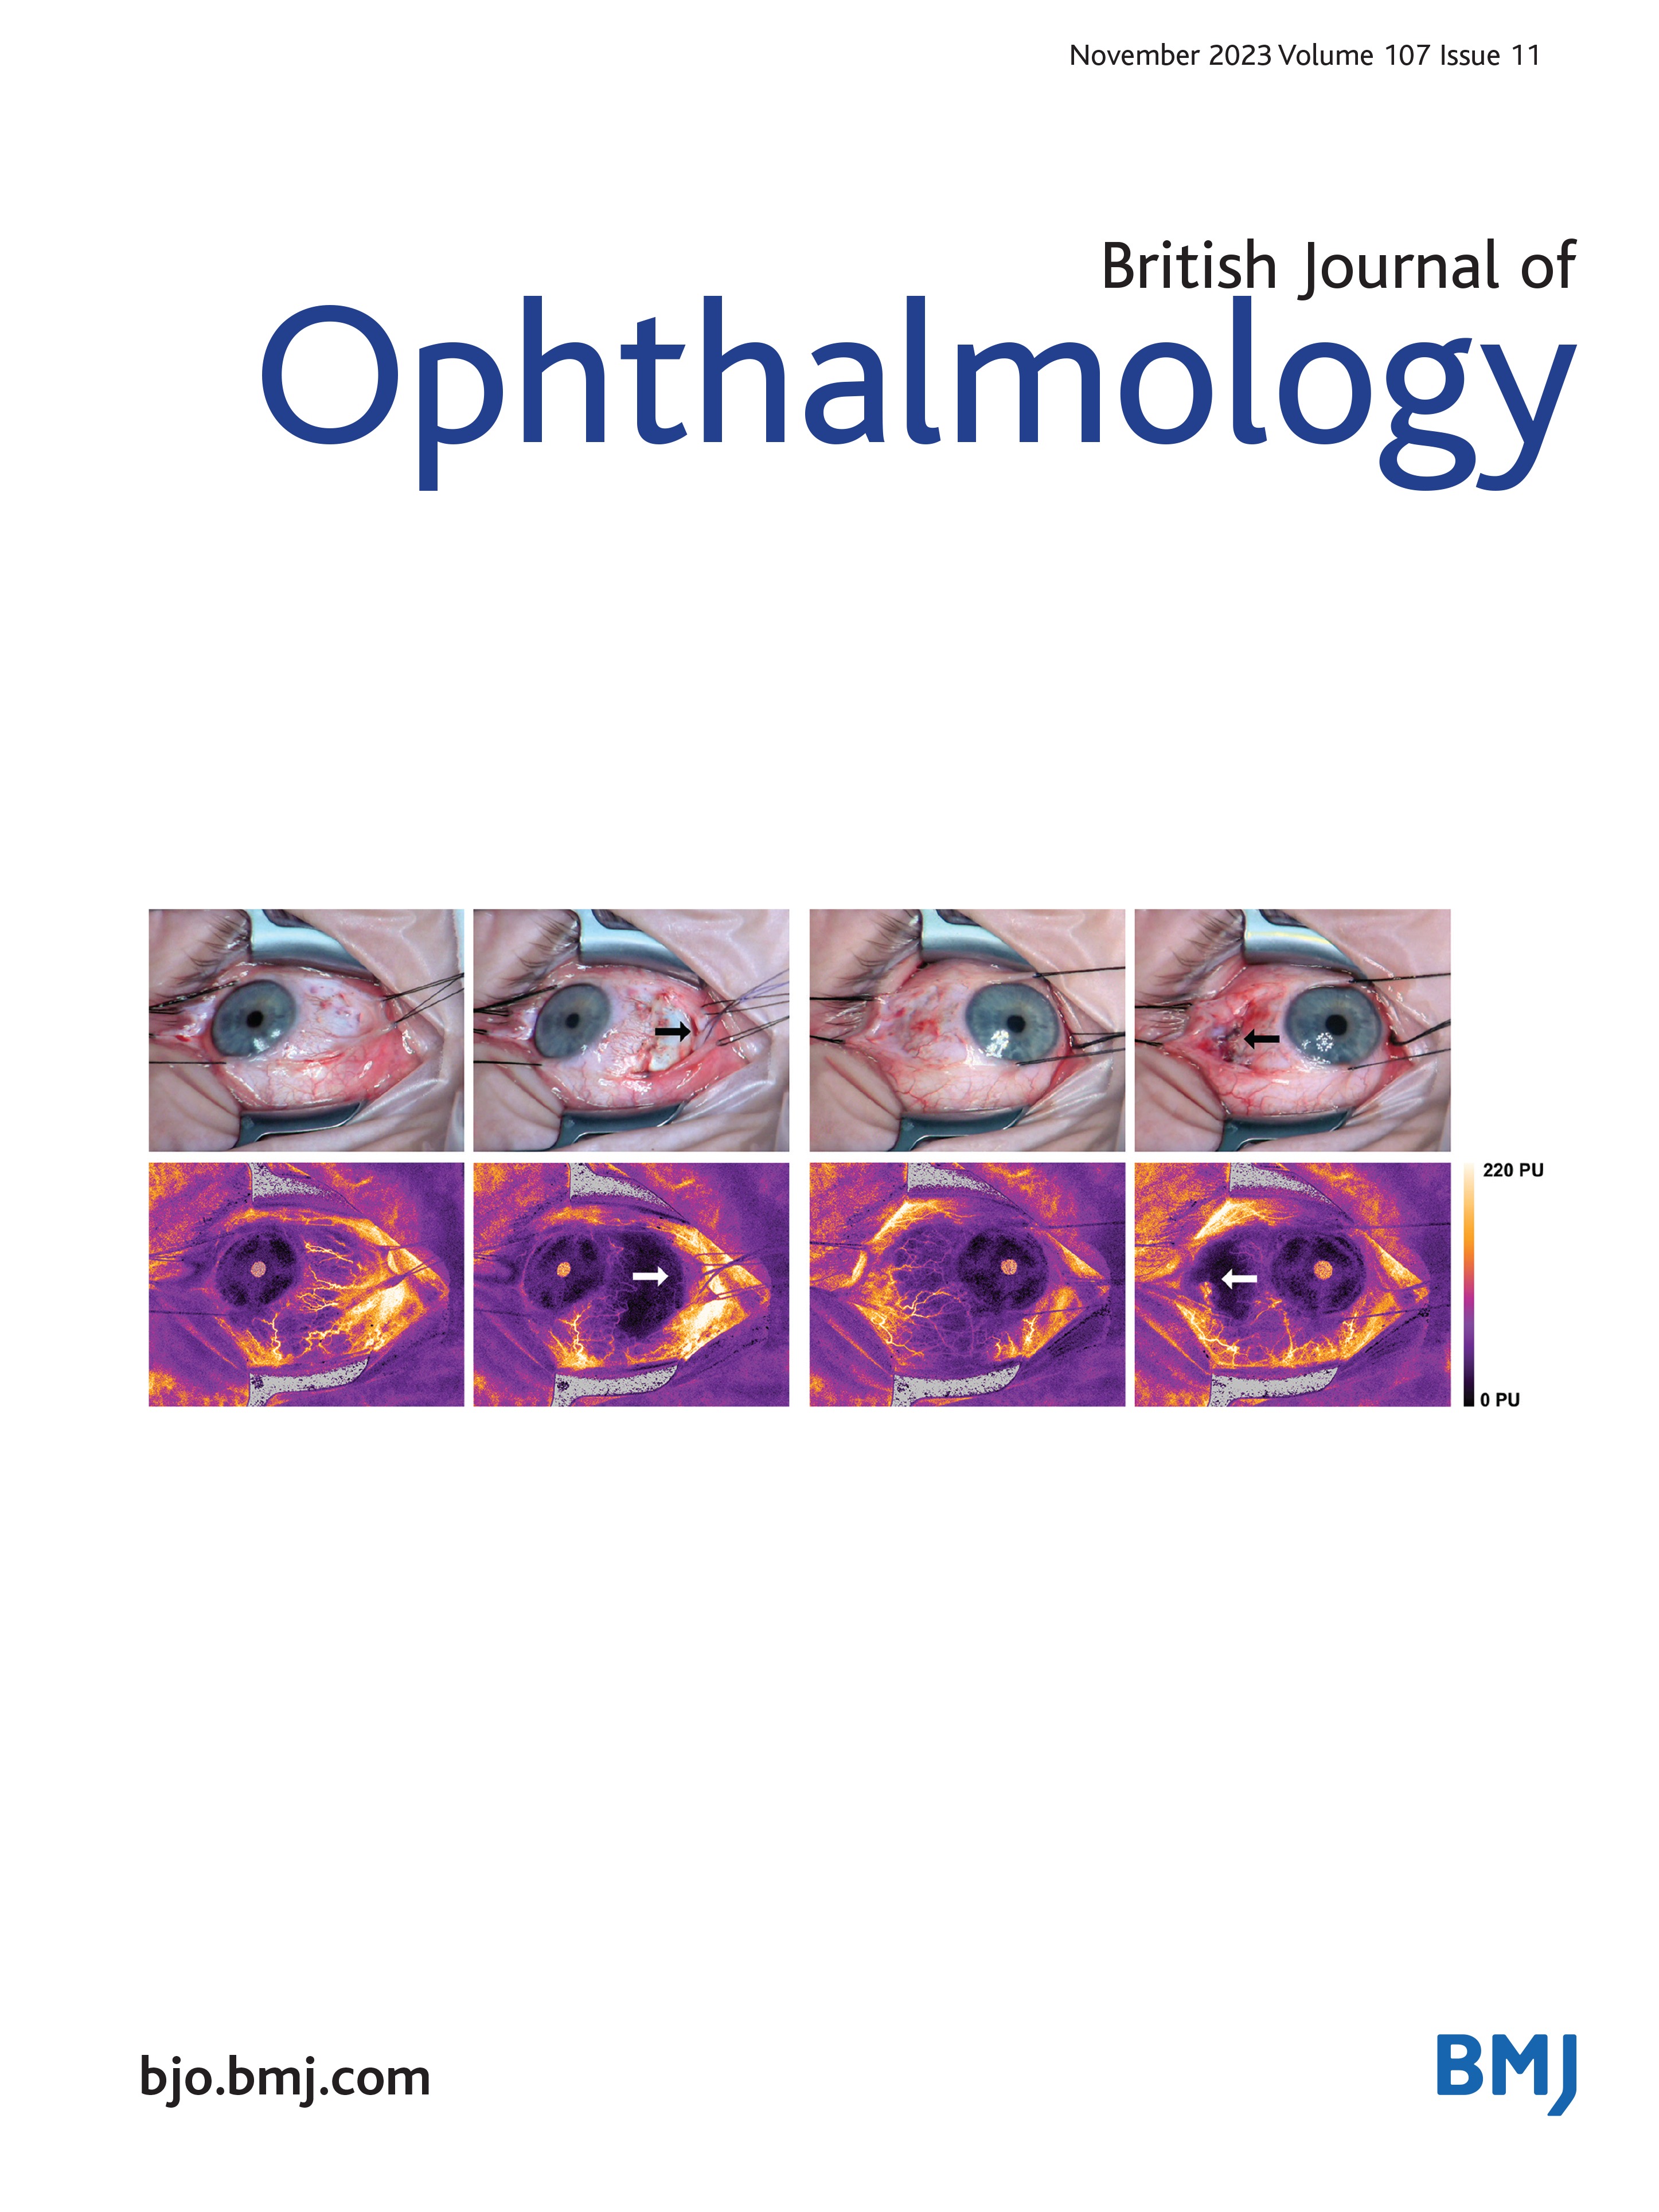 Ensemble neural network model for detecting thyroid eye disease using external photographs